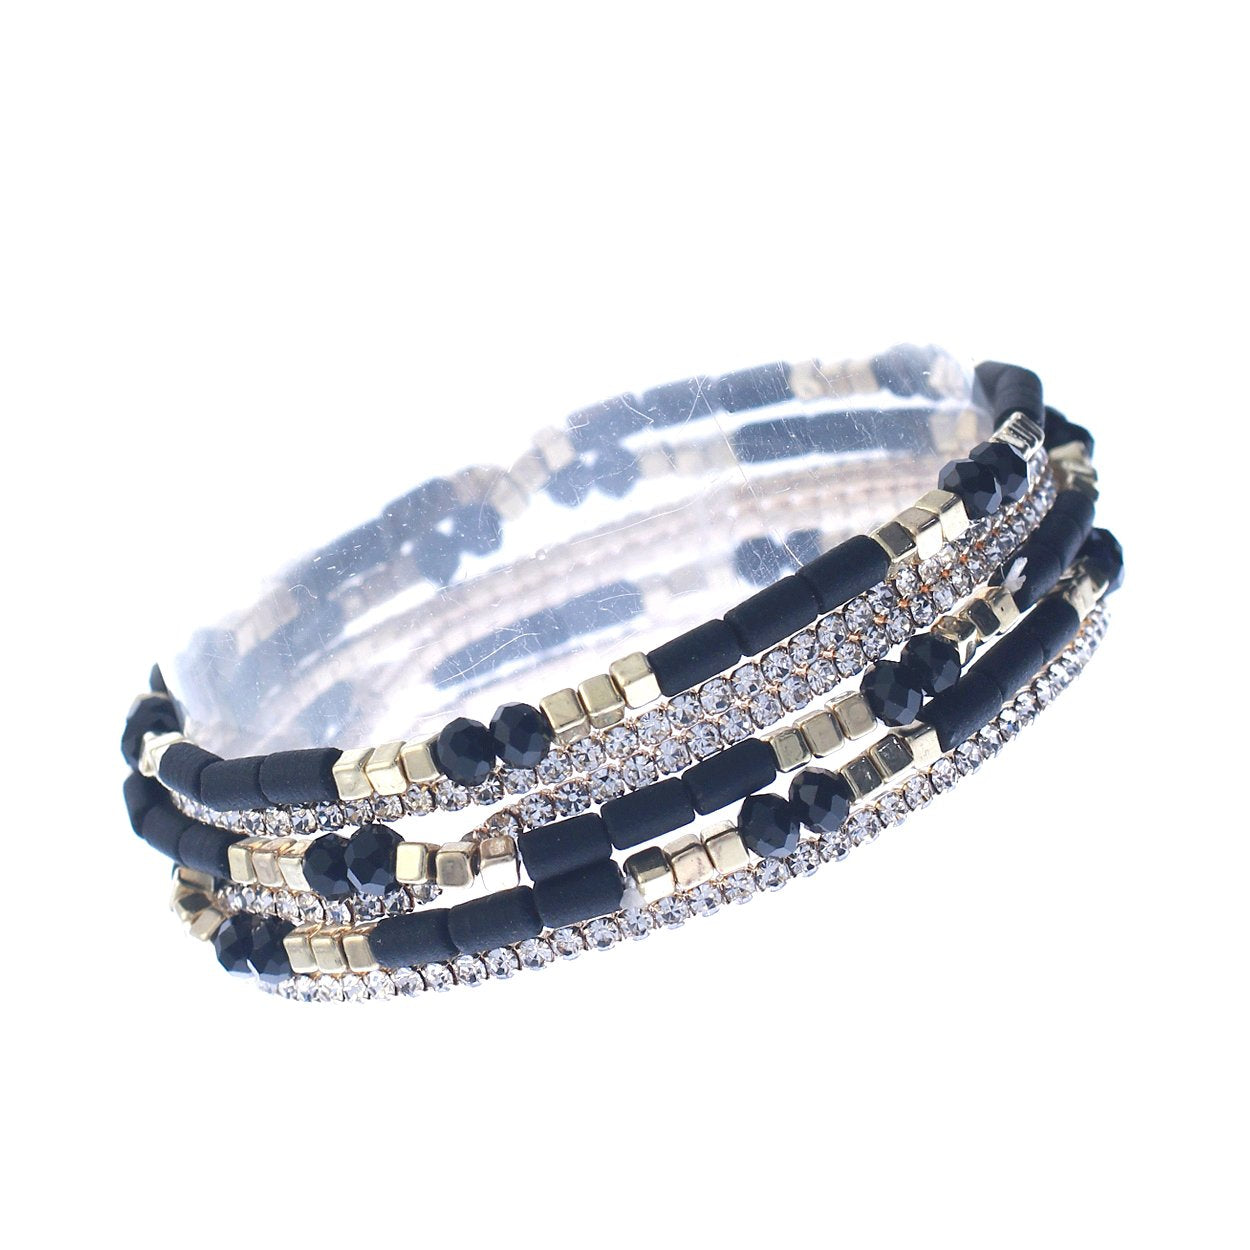 Chic Set of 6 Dainty Glass Bead Stacking Stretch Bracelet, 2.5" (Jet Black)